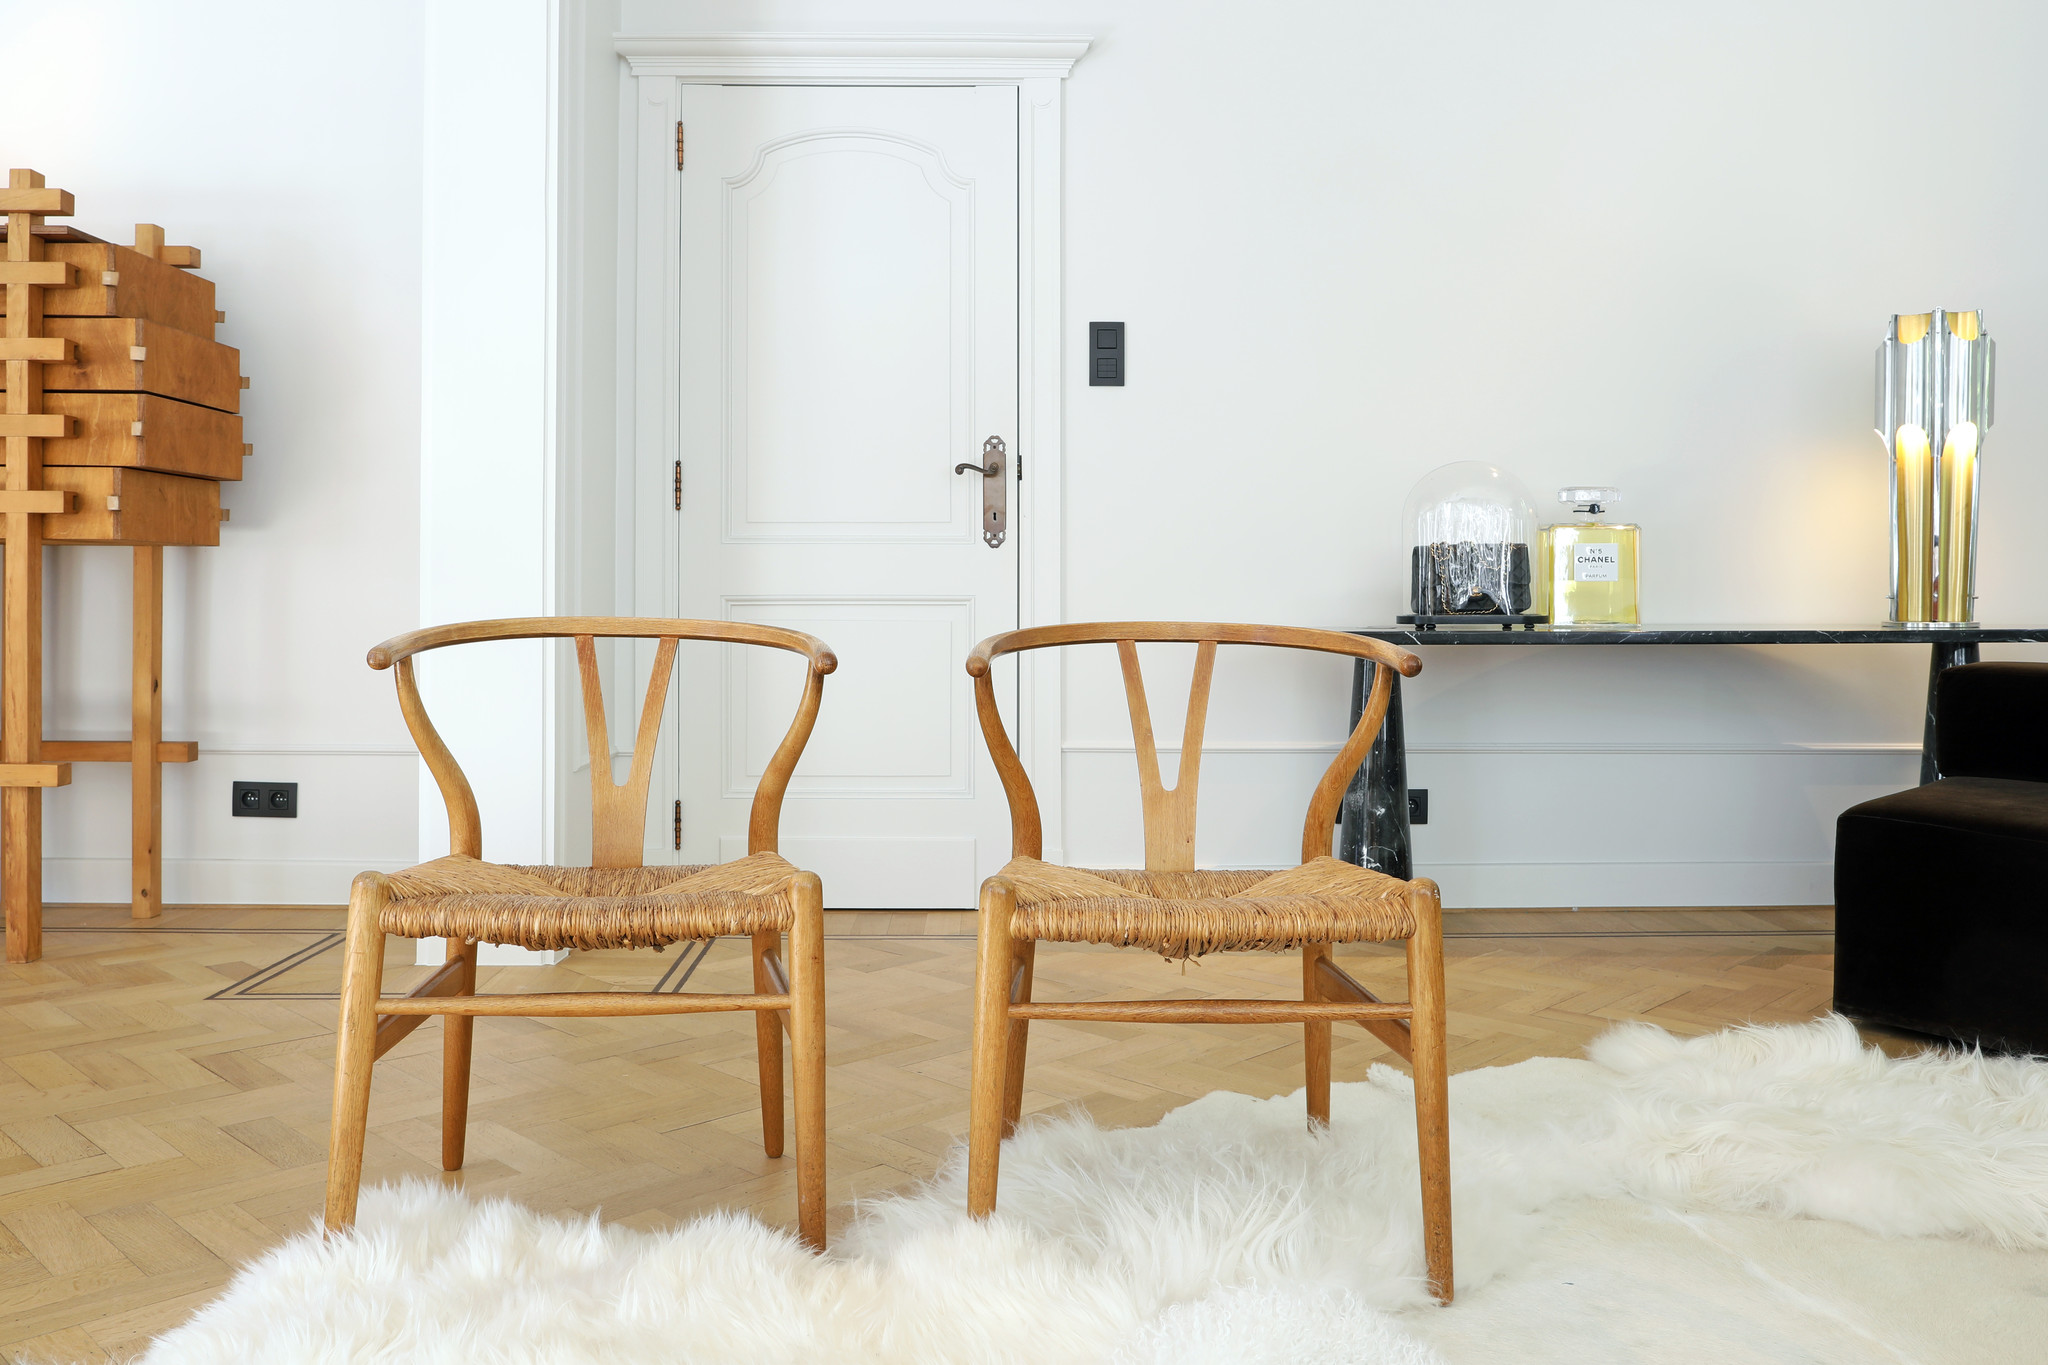 Set of 2 Wishbone chairs designed by Hans Wegner for Carl Hansen & son, 1950s